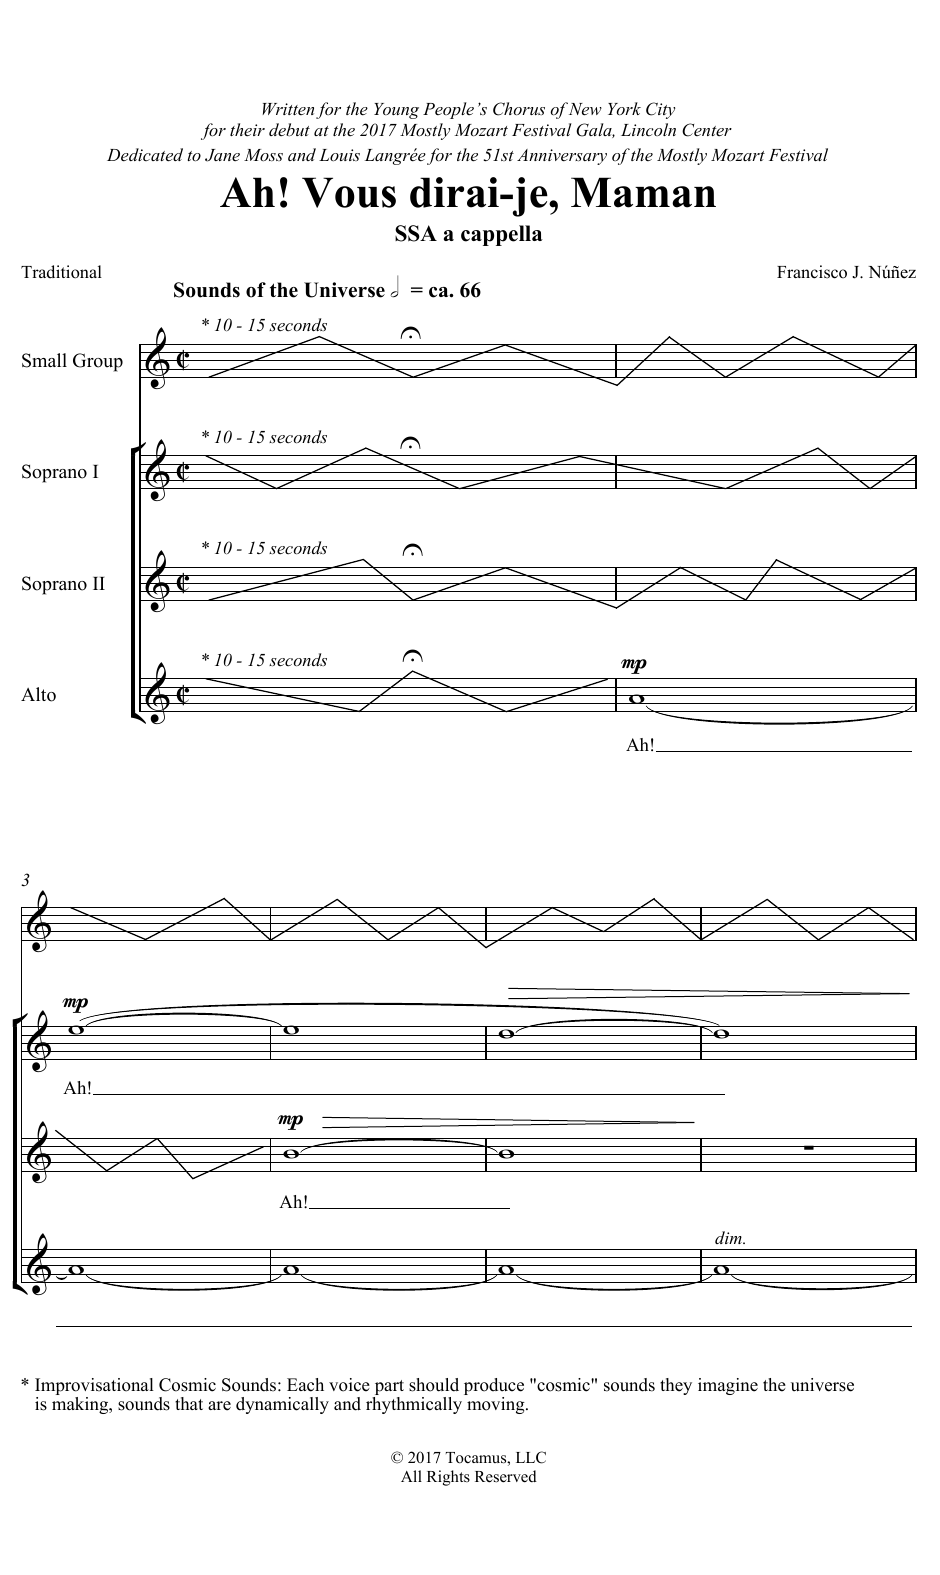 Download Francisco J. Núñez Ah! Vous dirai-je, Maman Sheet Music and learn how to play SSA Choir PDF digital score in minutes